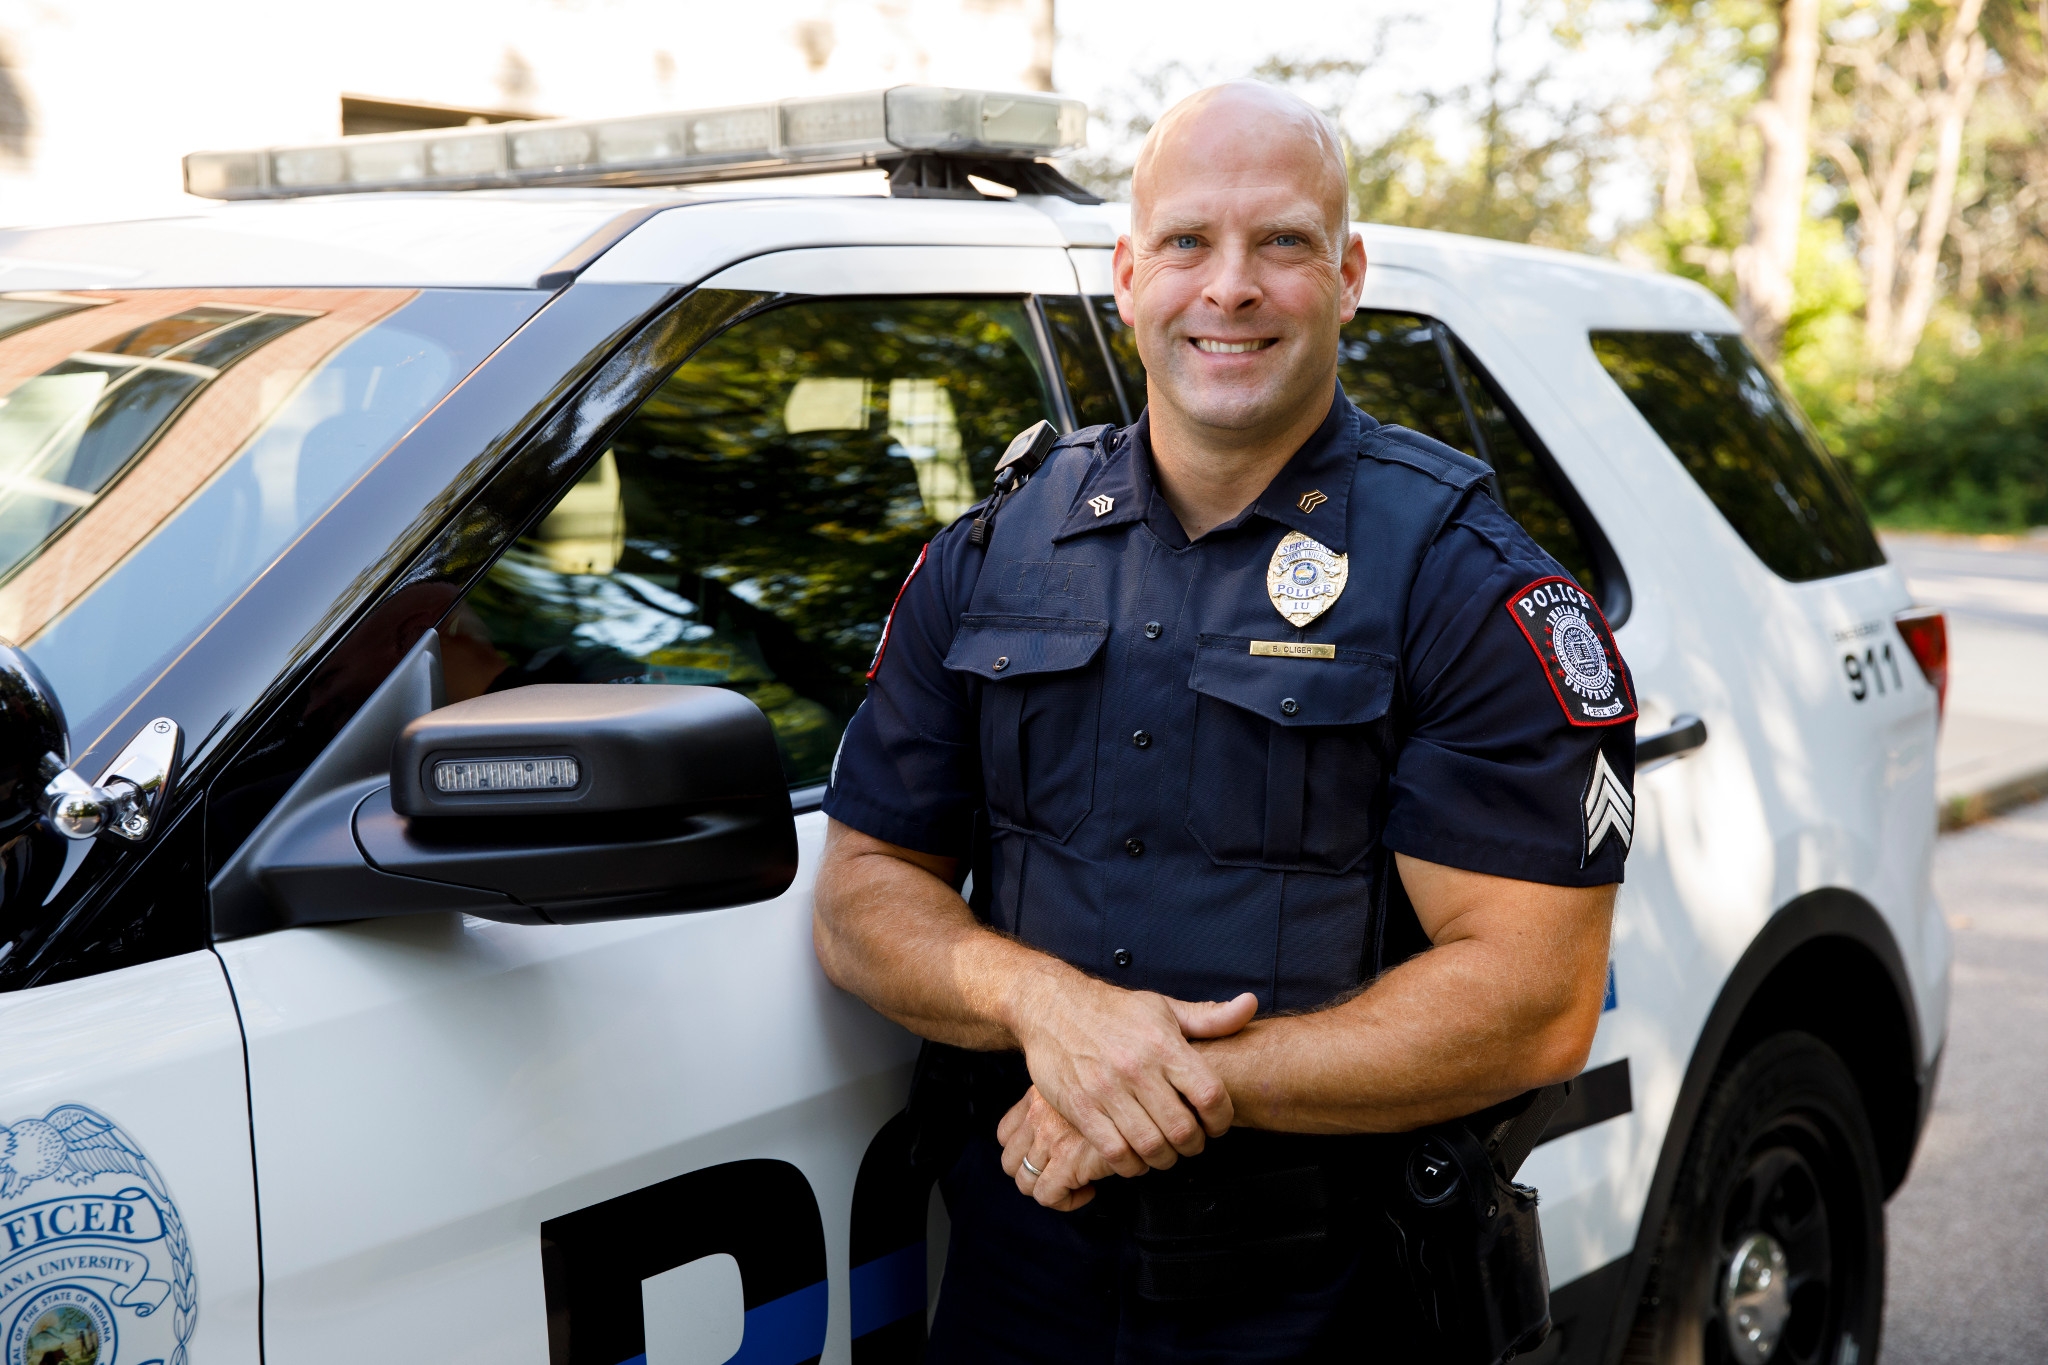 Purdue police sergeant creates startup after designing bulletproof